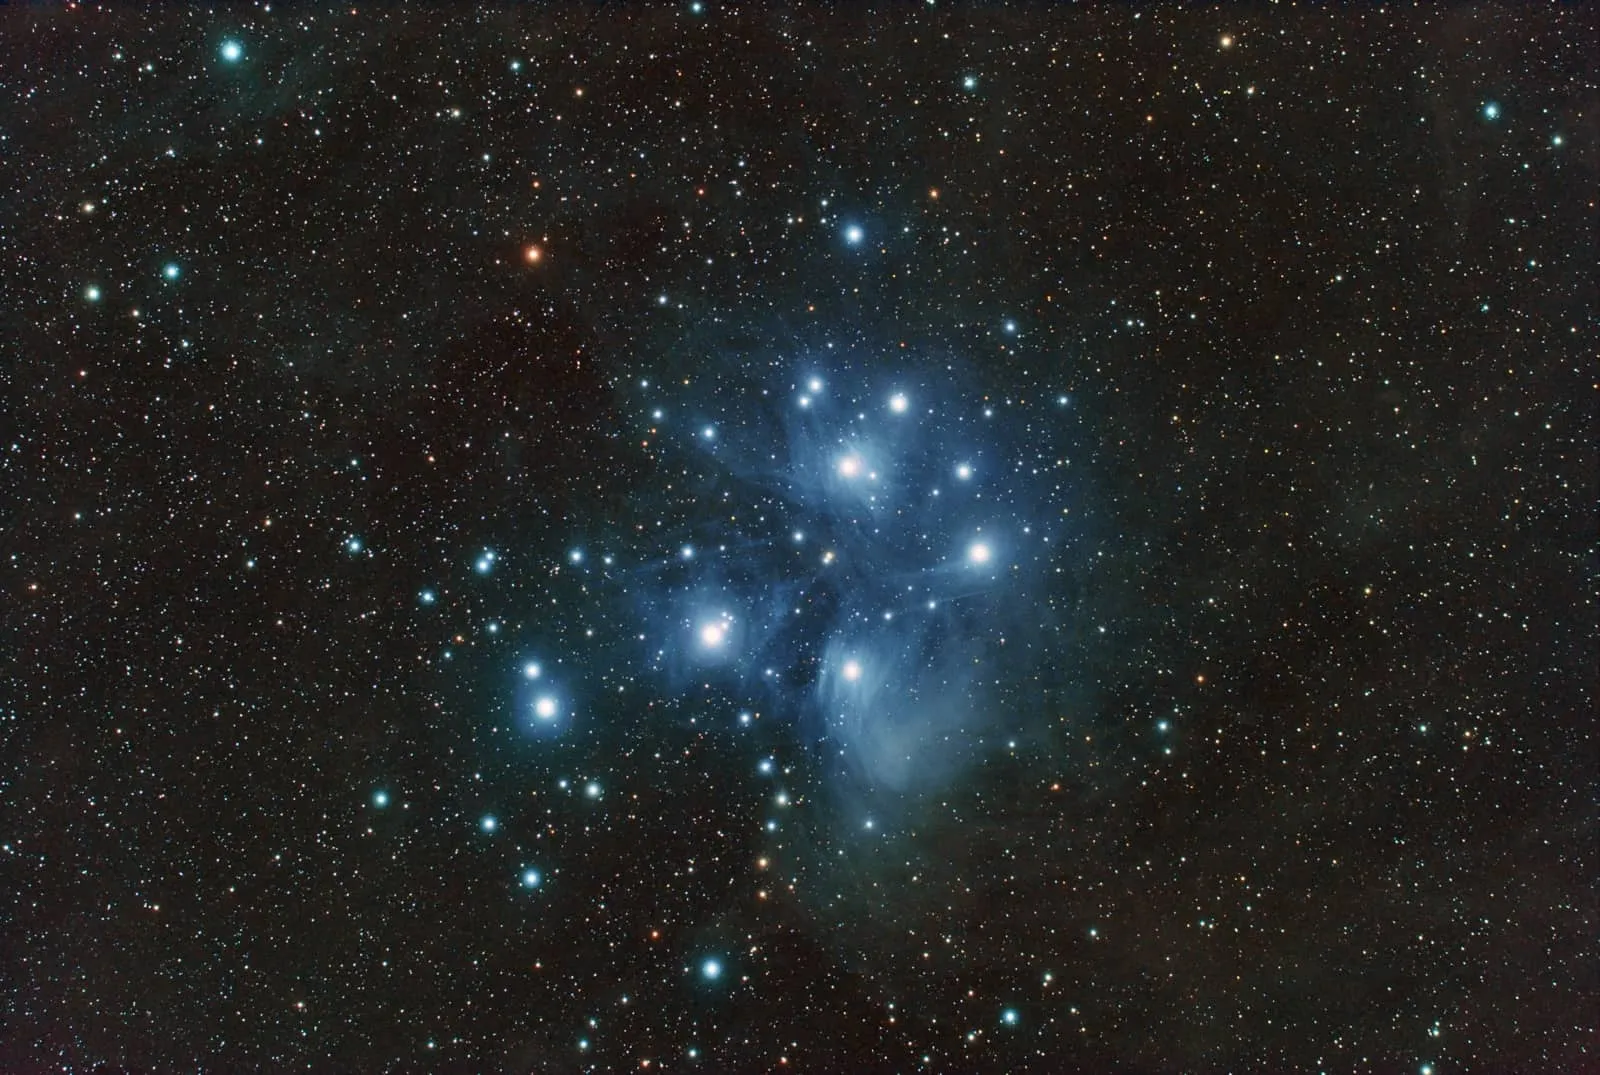 M45, the Pleiades